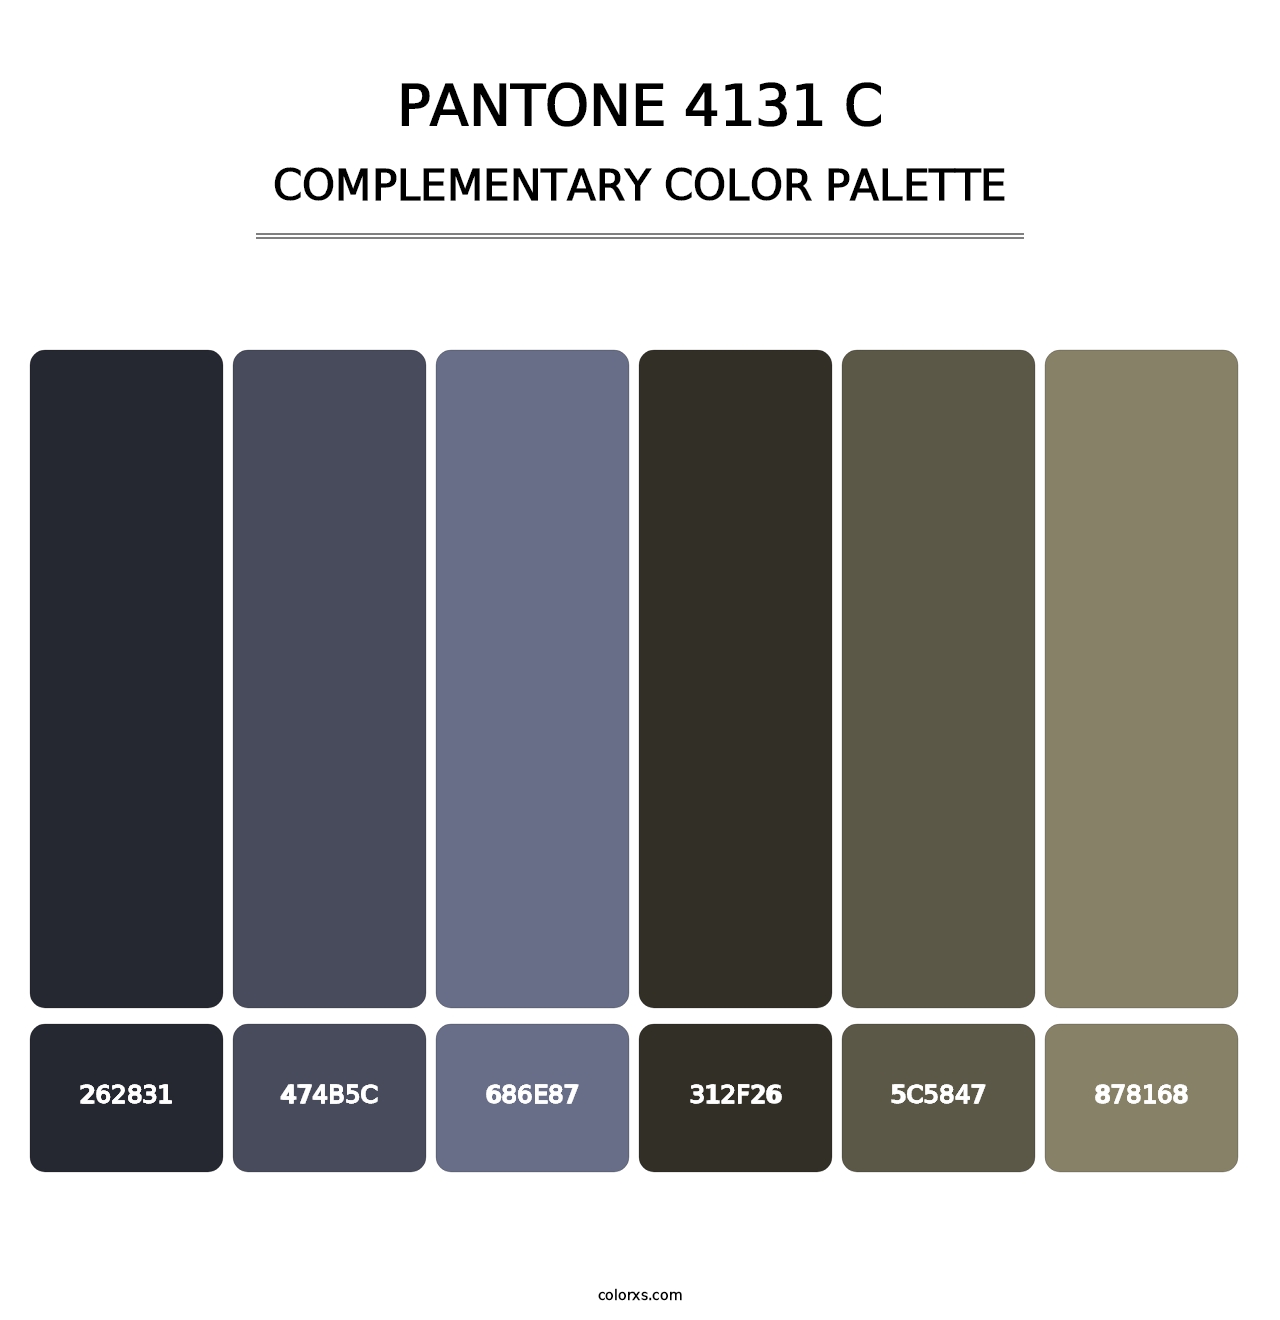 PANTONE 4131 C - Complementary Color Palette